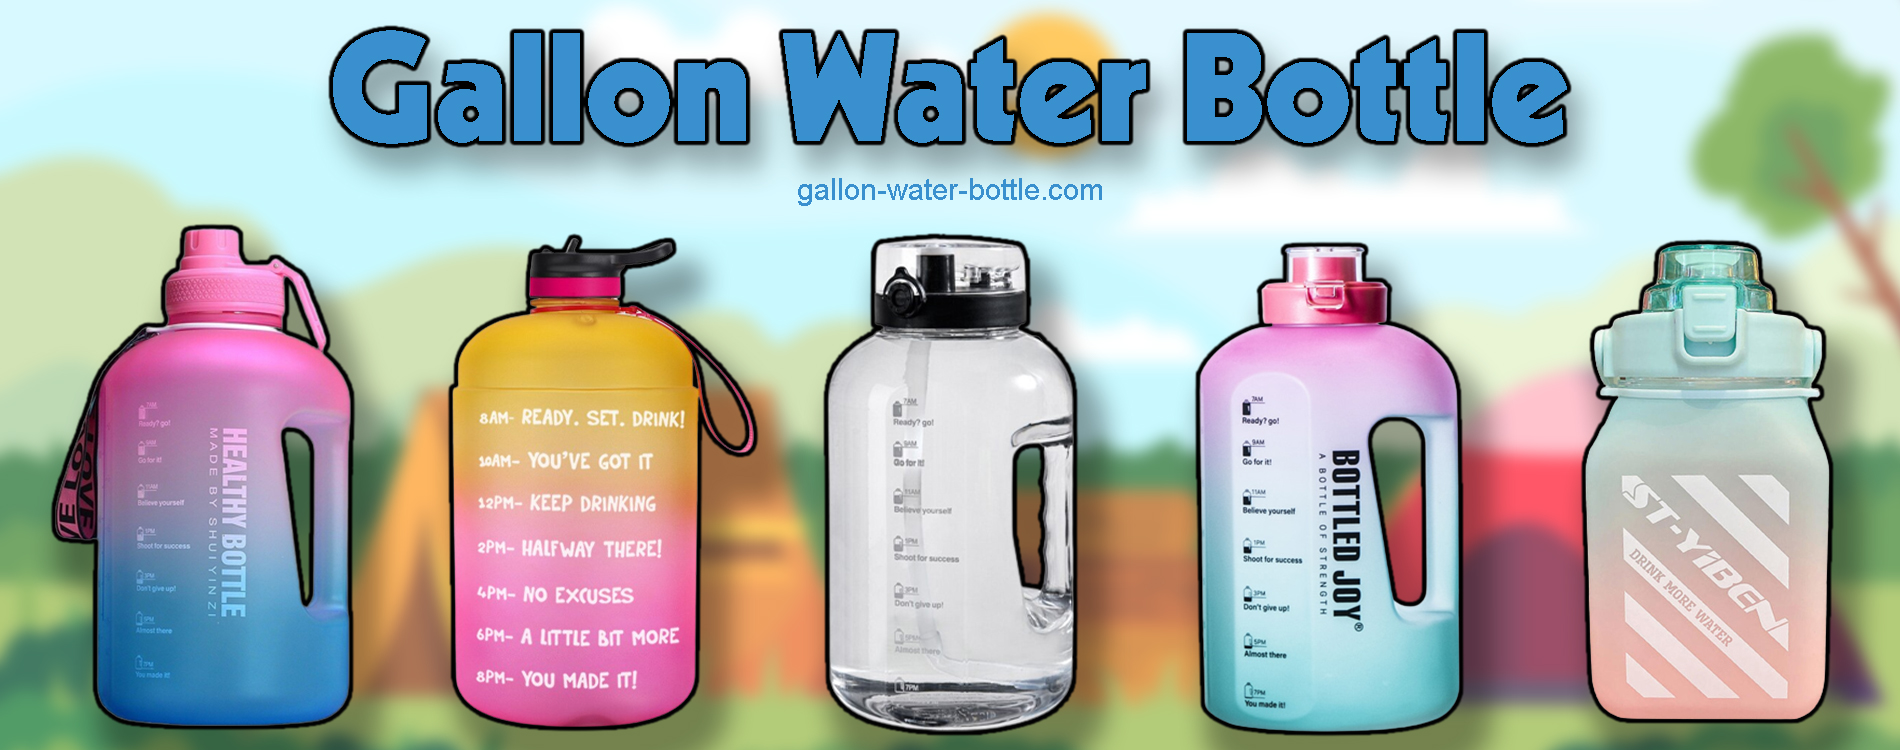 gallon-water-bottle-banner